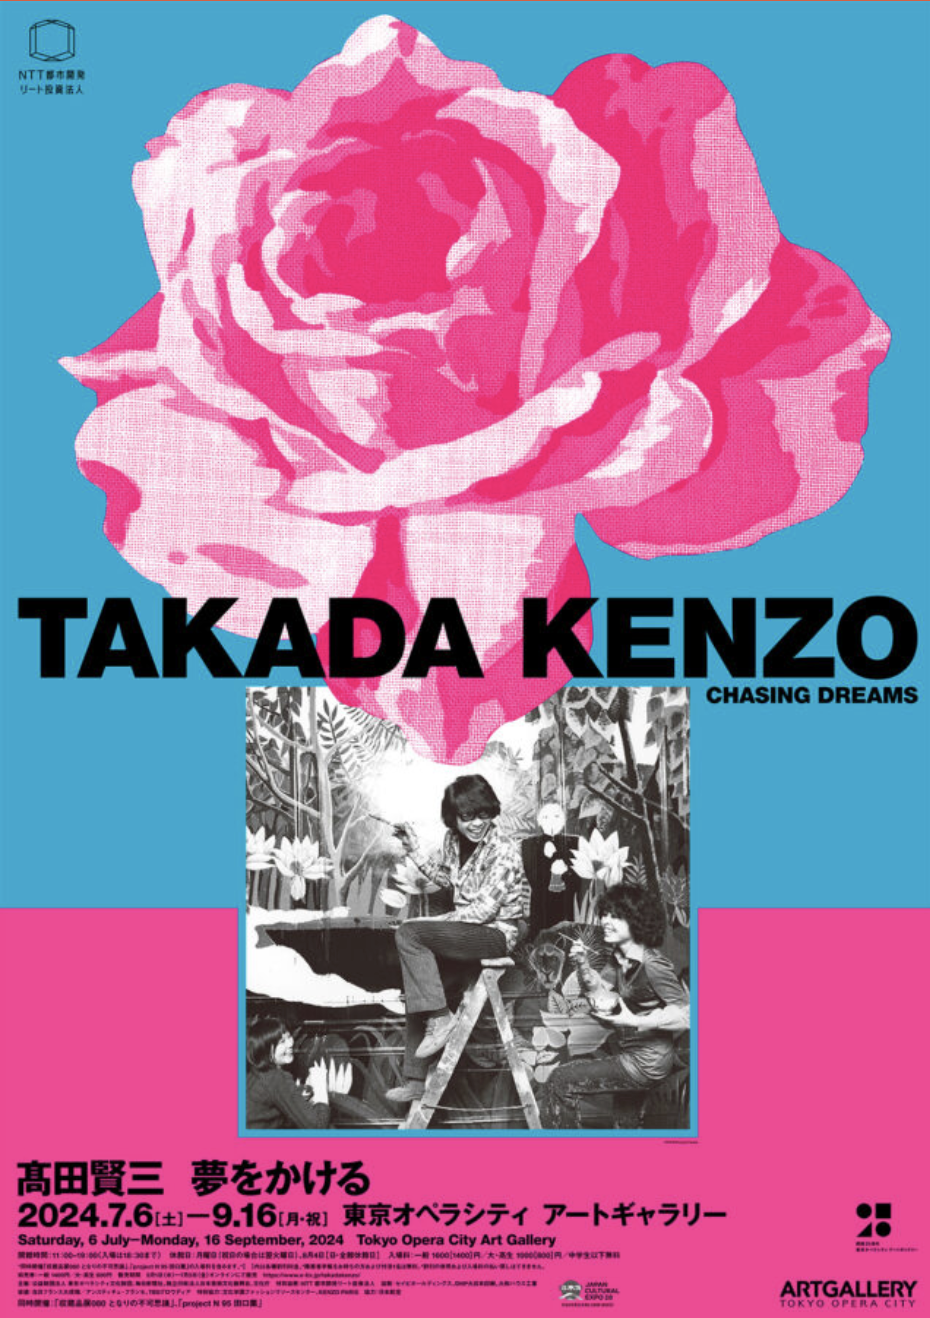 TAKADA KENZO: CHASING DREAMS